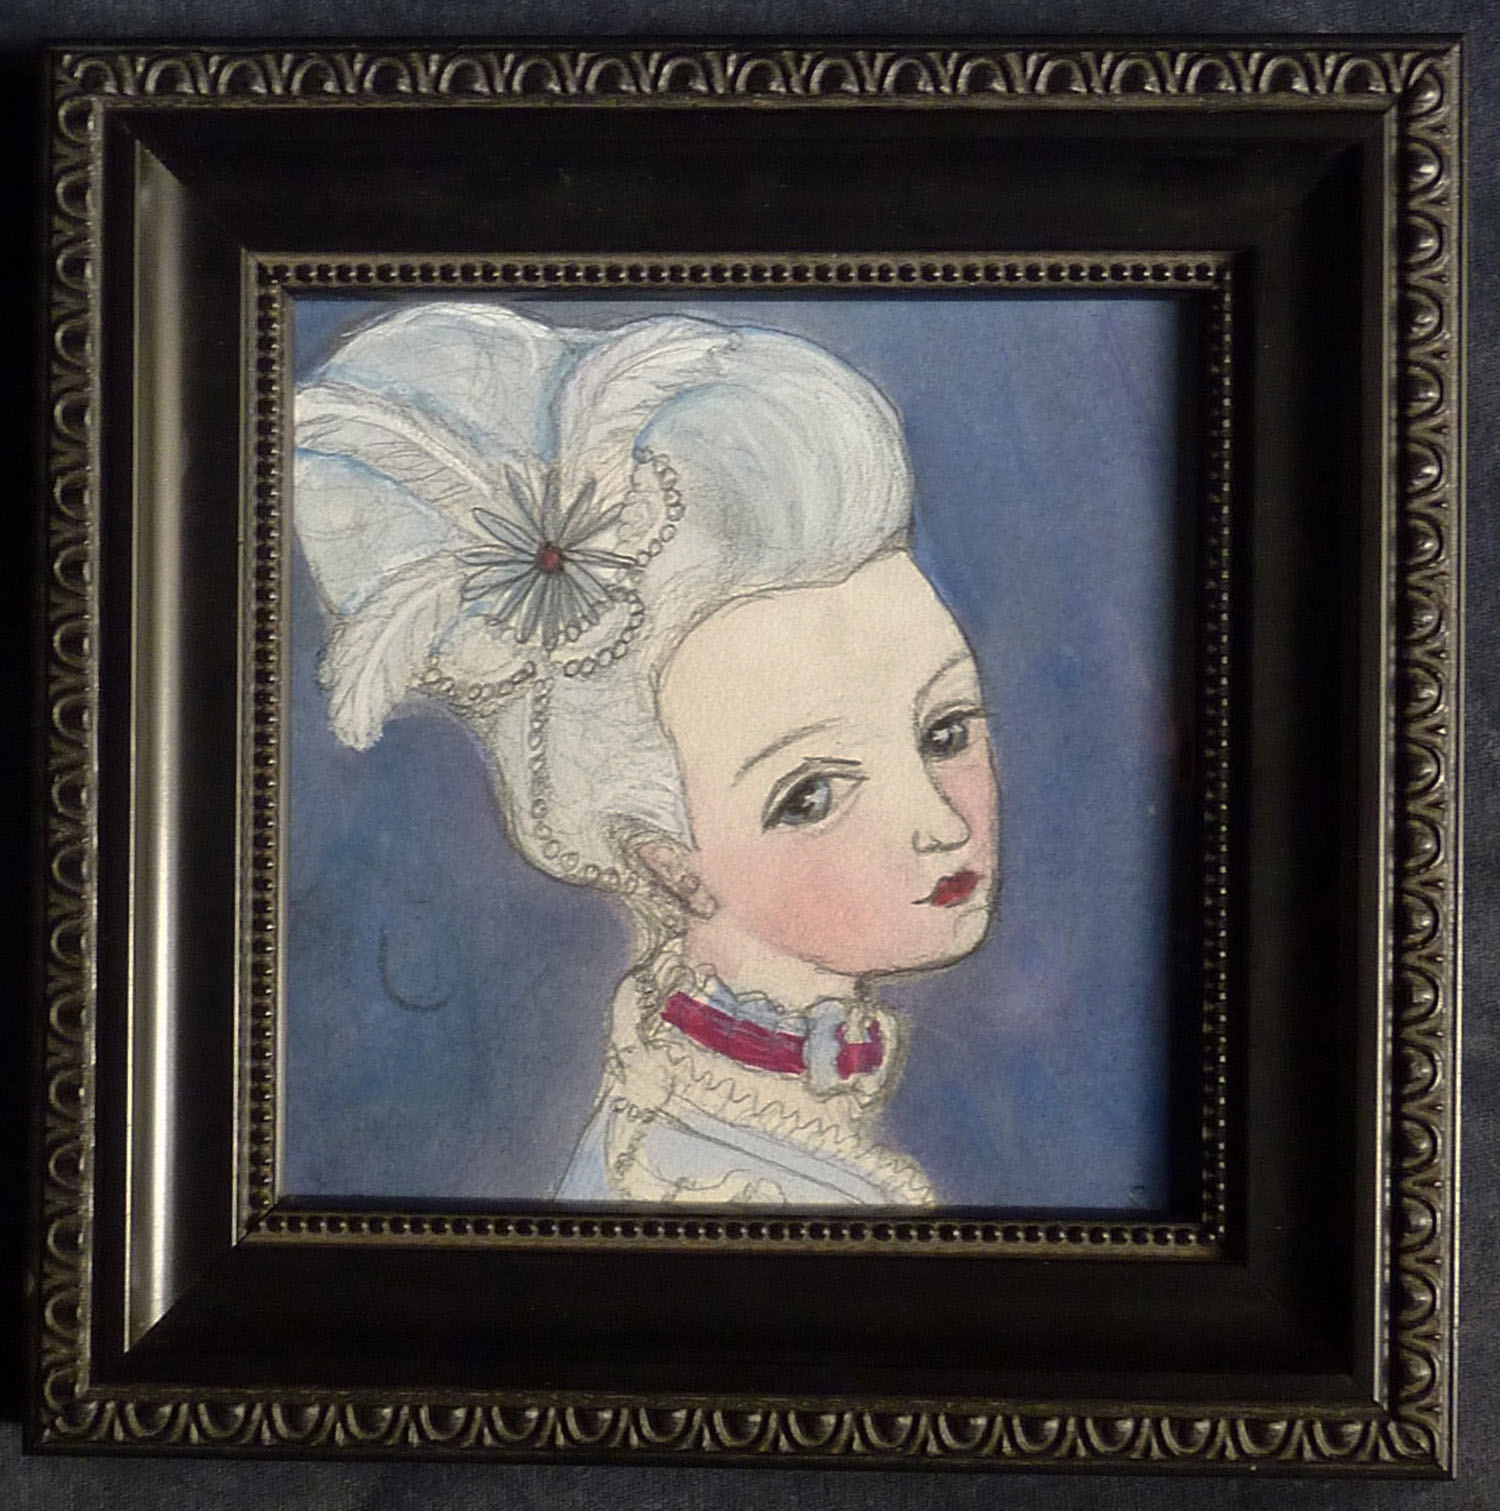 Marie Antoinette, Last Queen of France